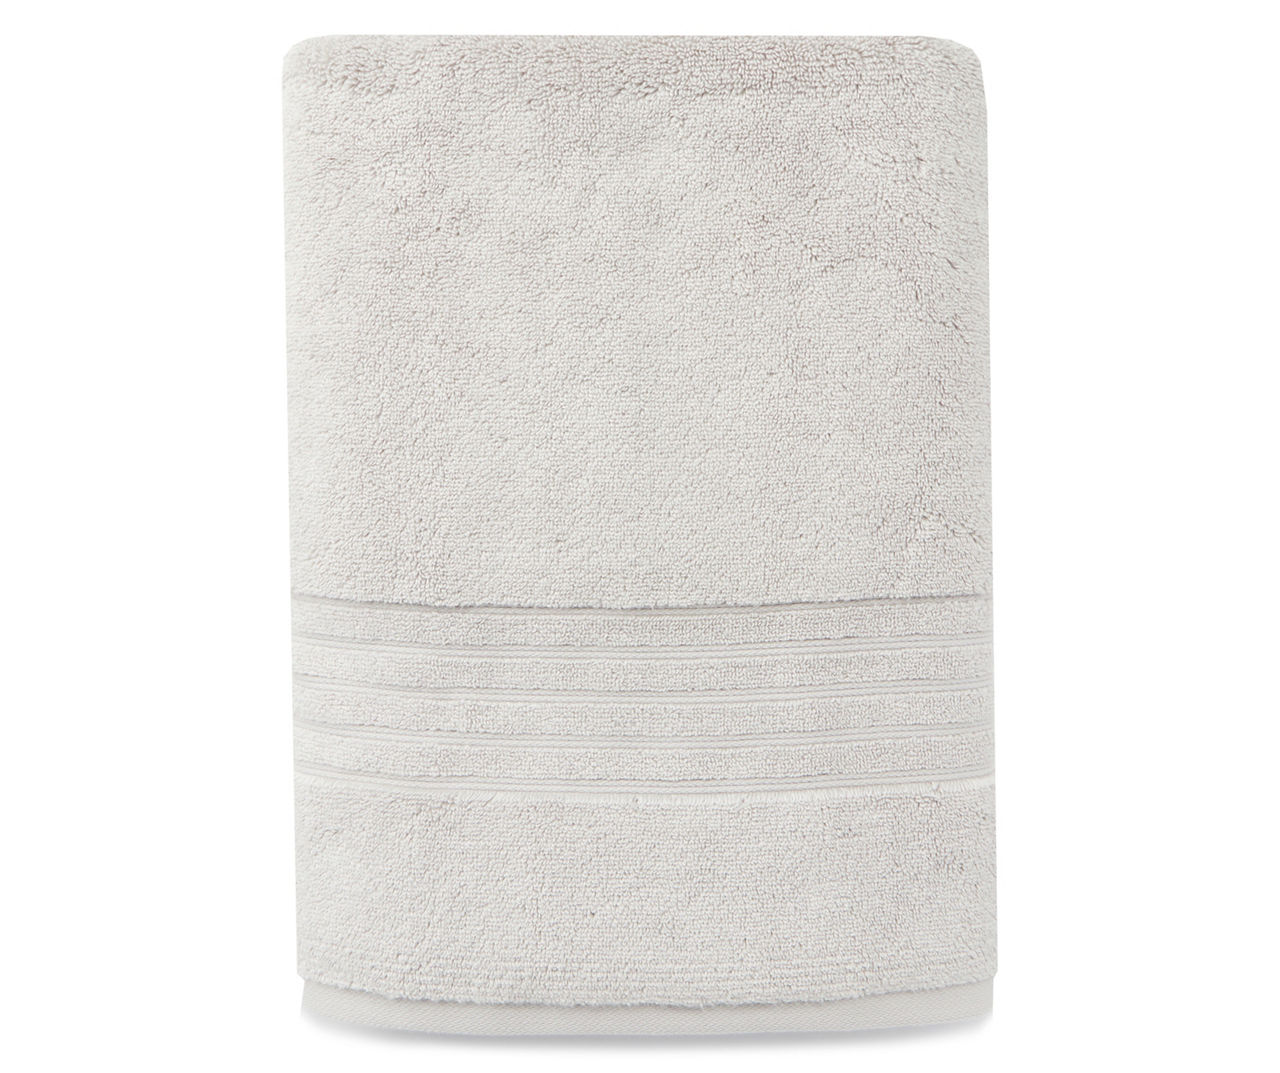 Broyhill Gray Egyptian Cotton Bath Towel